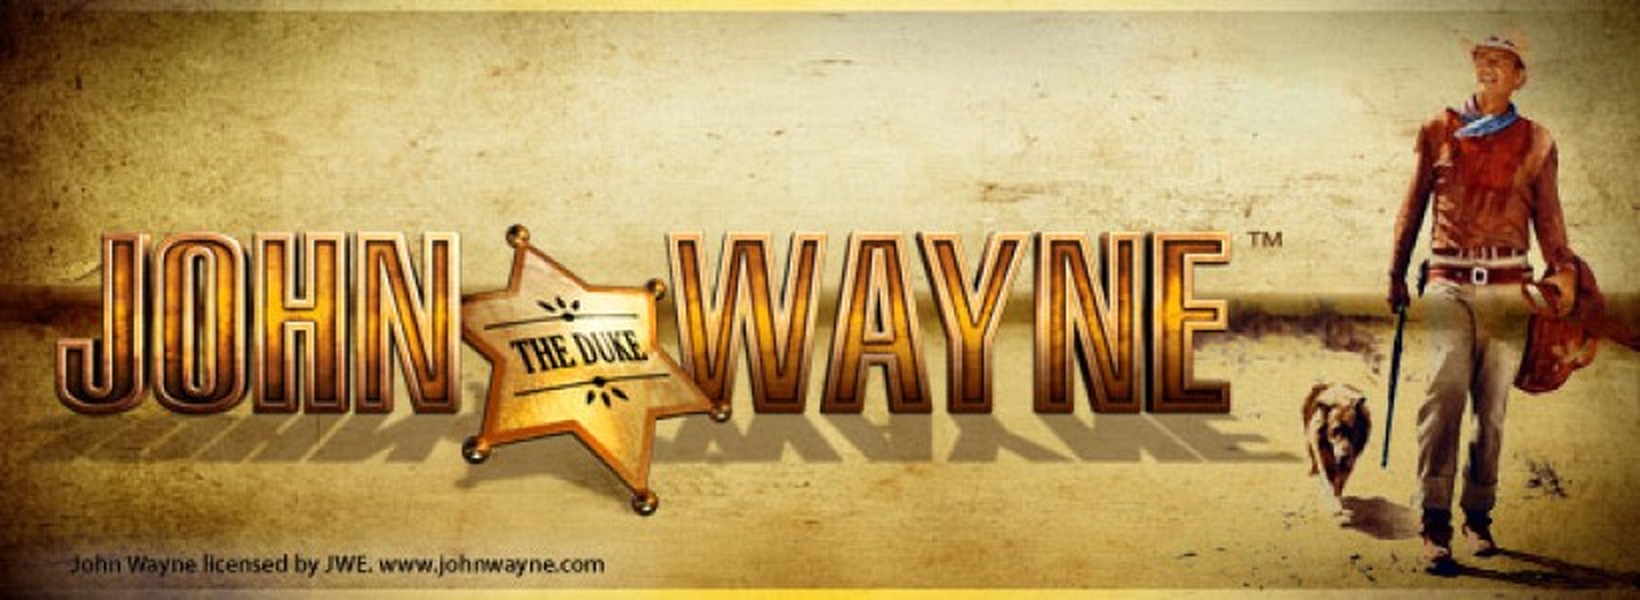 John Wayne demo